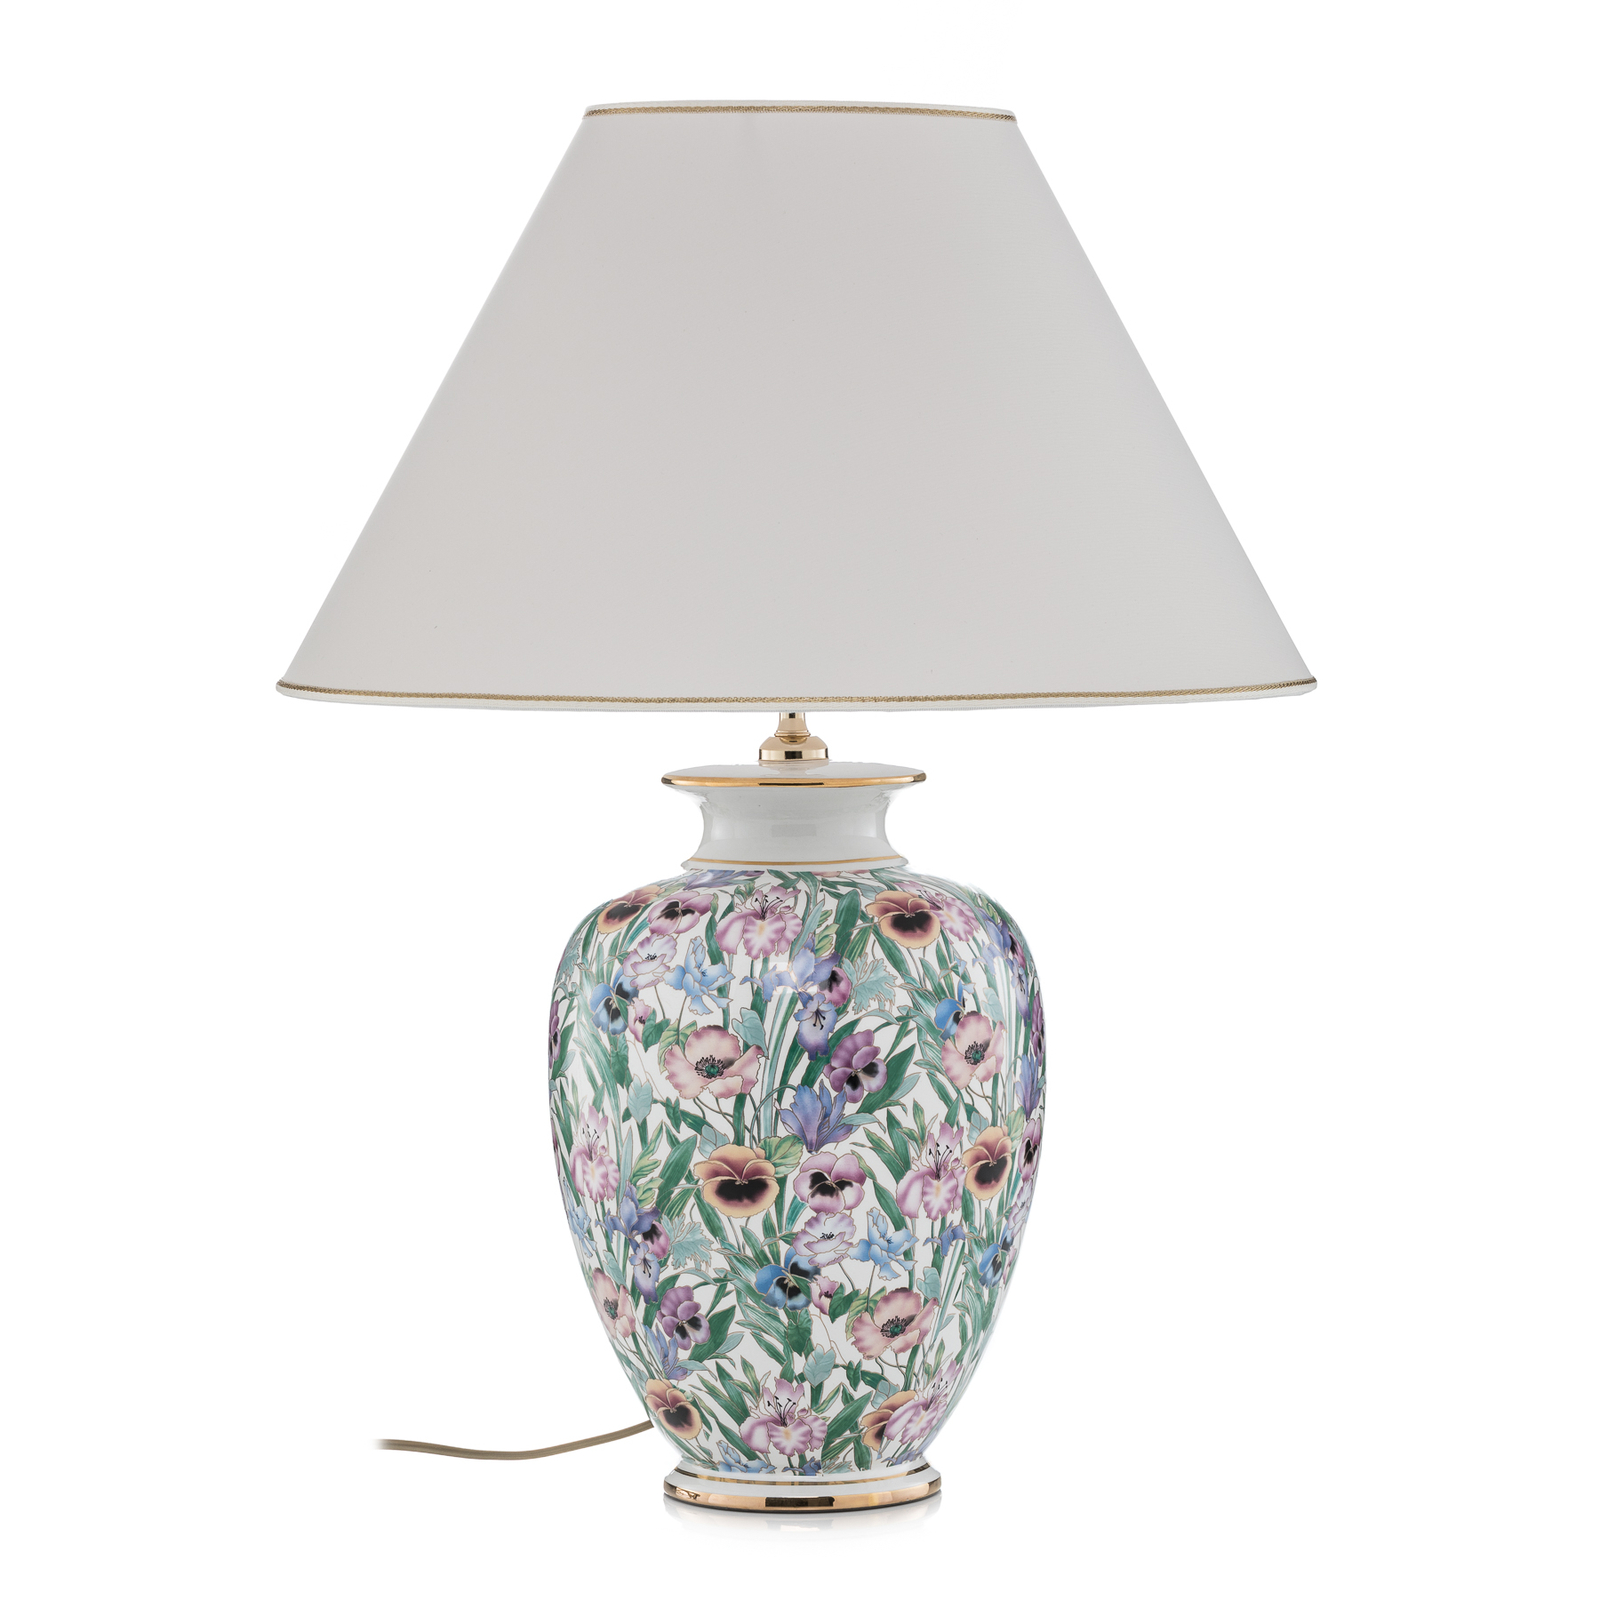 KOLARZ Giardino Panse - floral table lamp, 50 cm